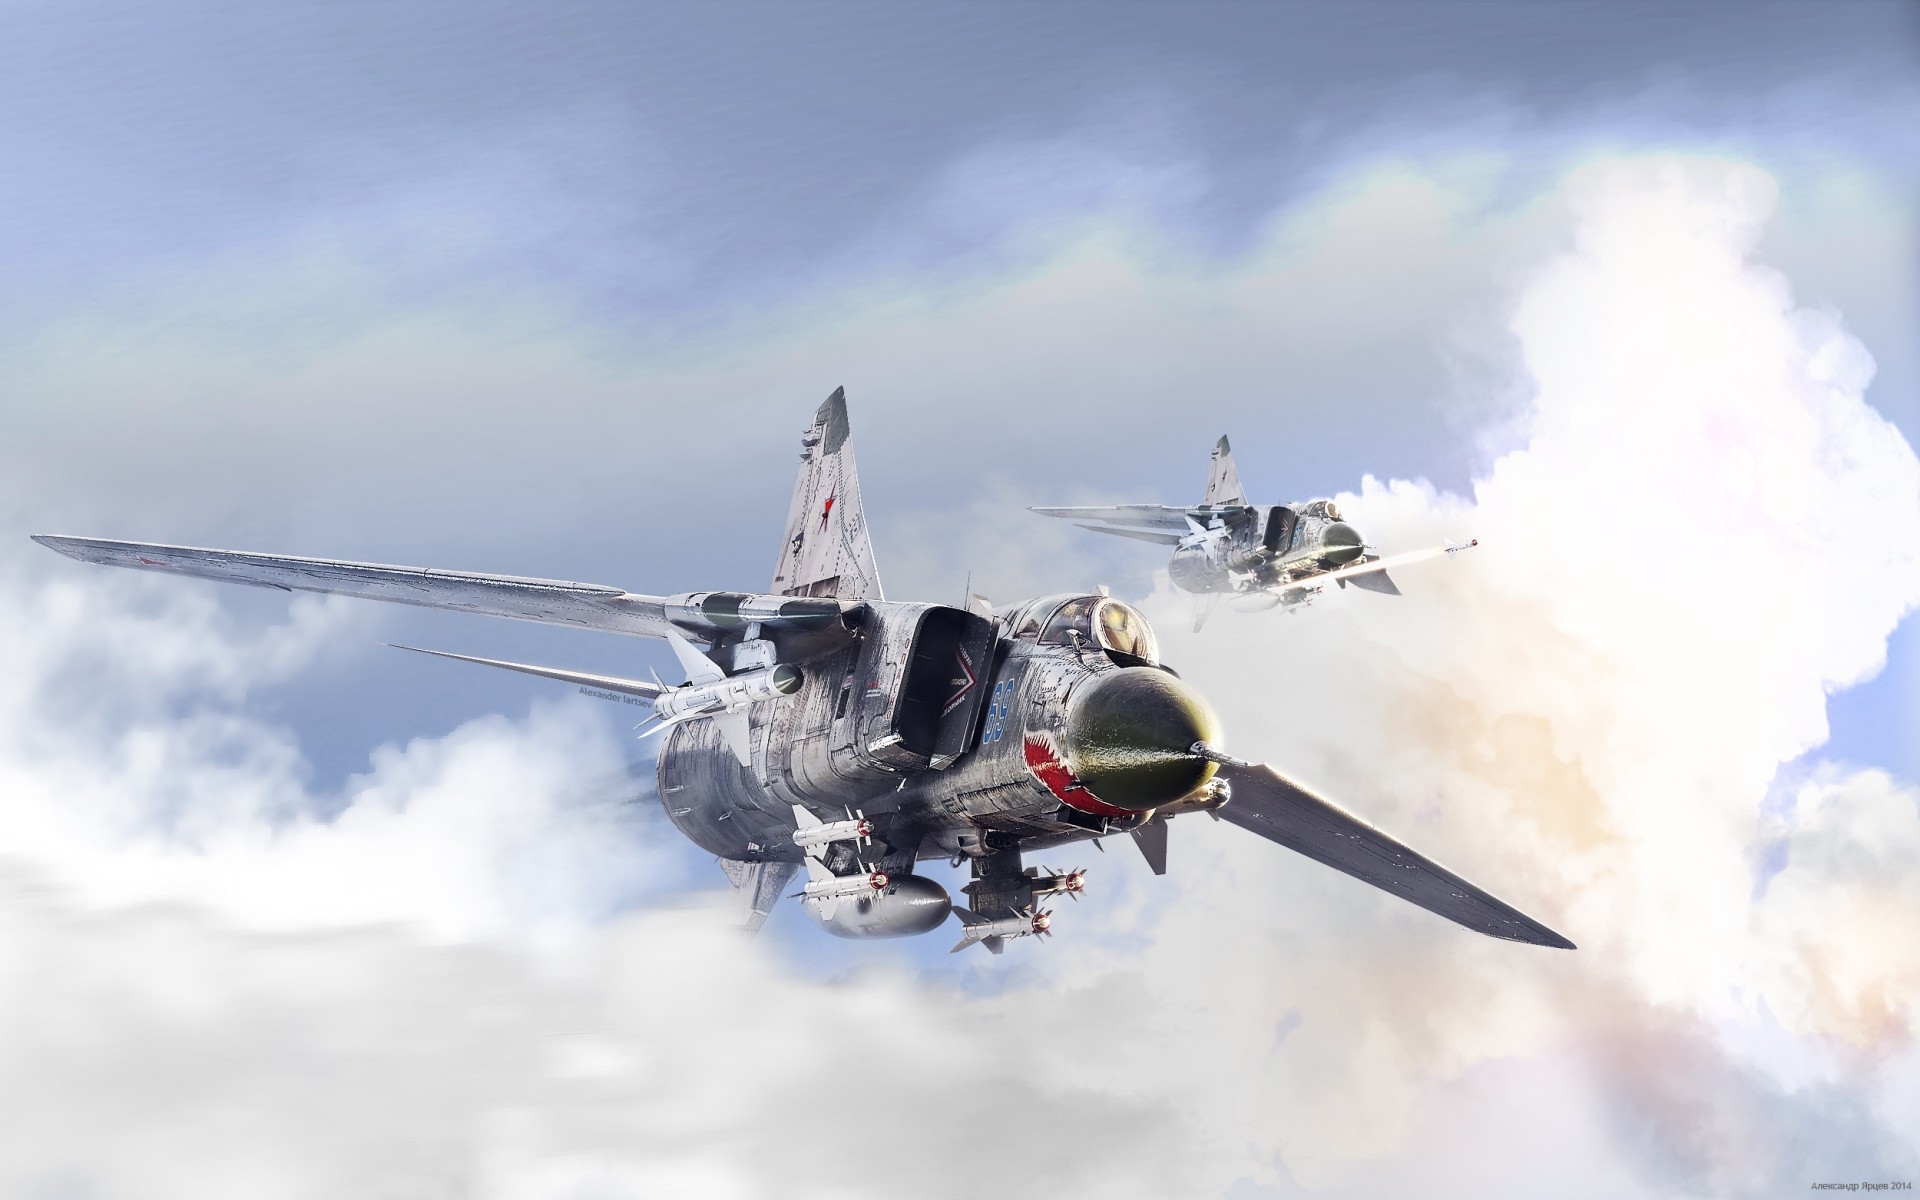 General 1920x1200 artwork military aircraft military vehicle aircraft military vehicle MiG-23 digital art